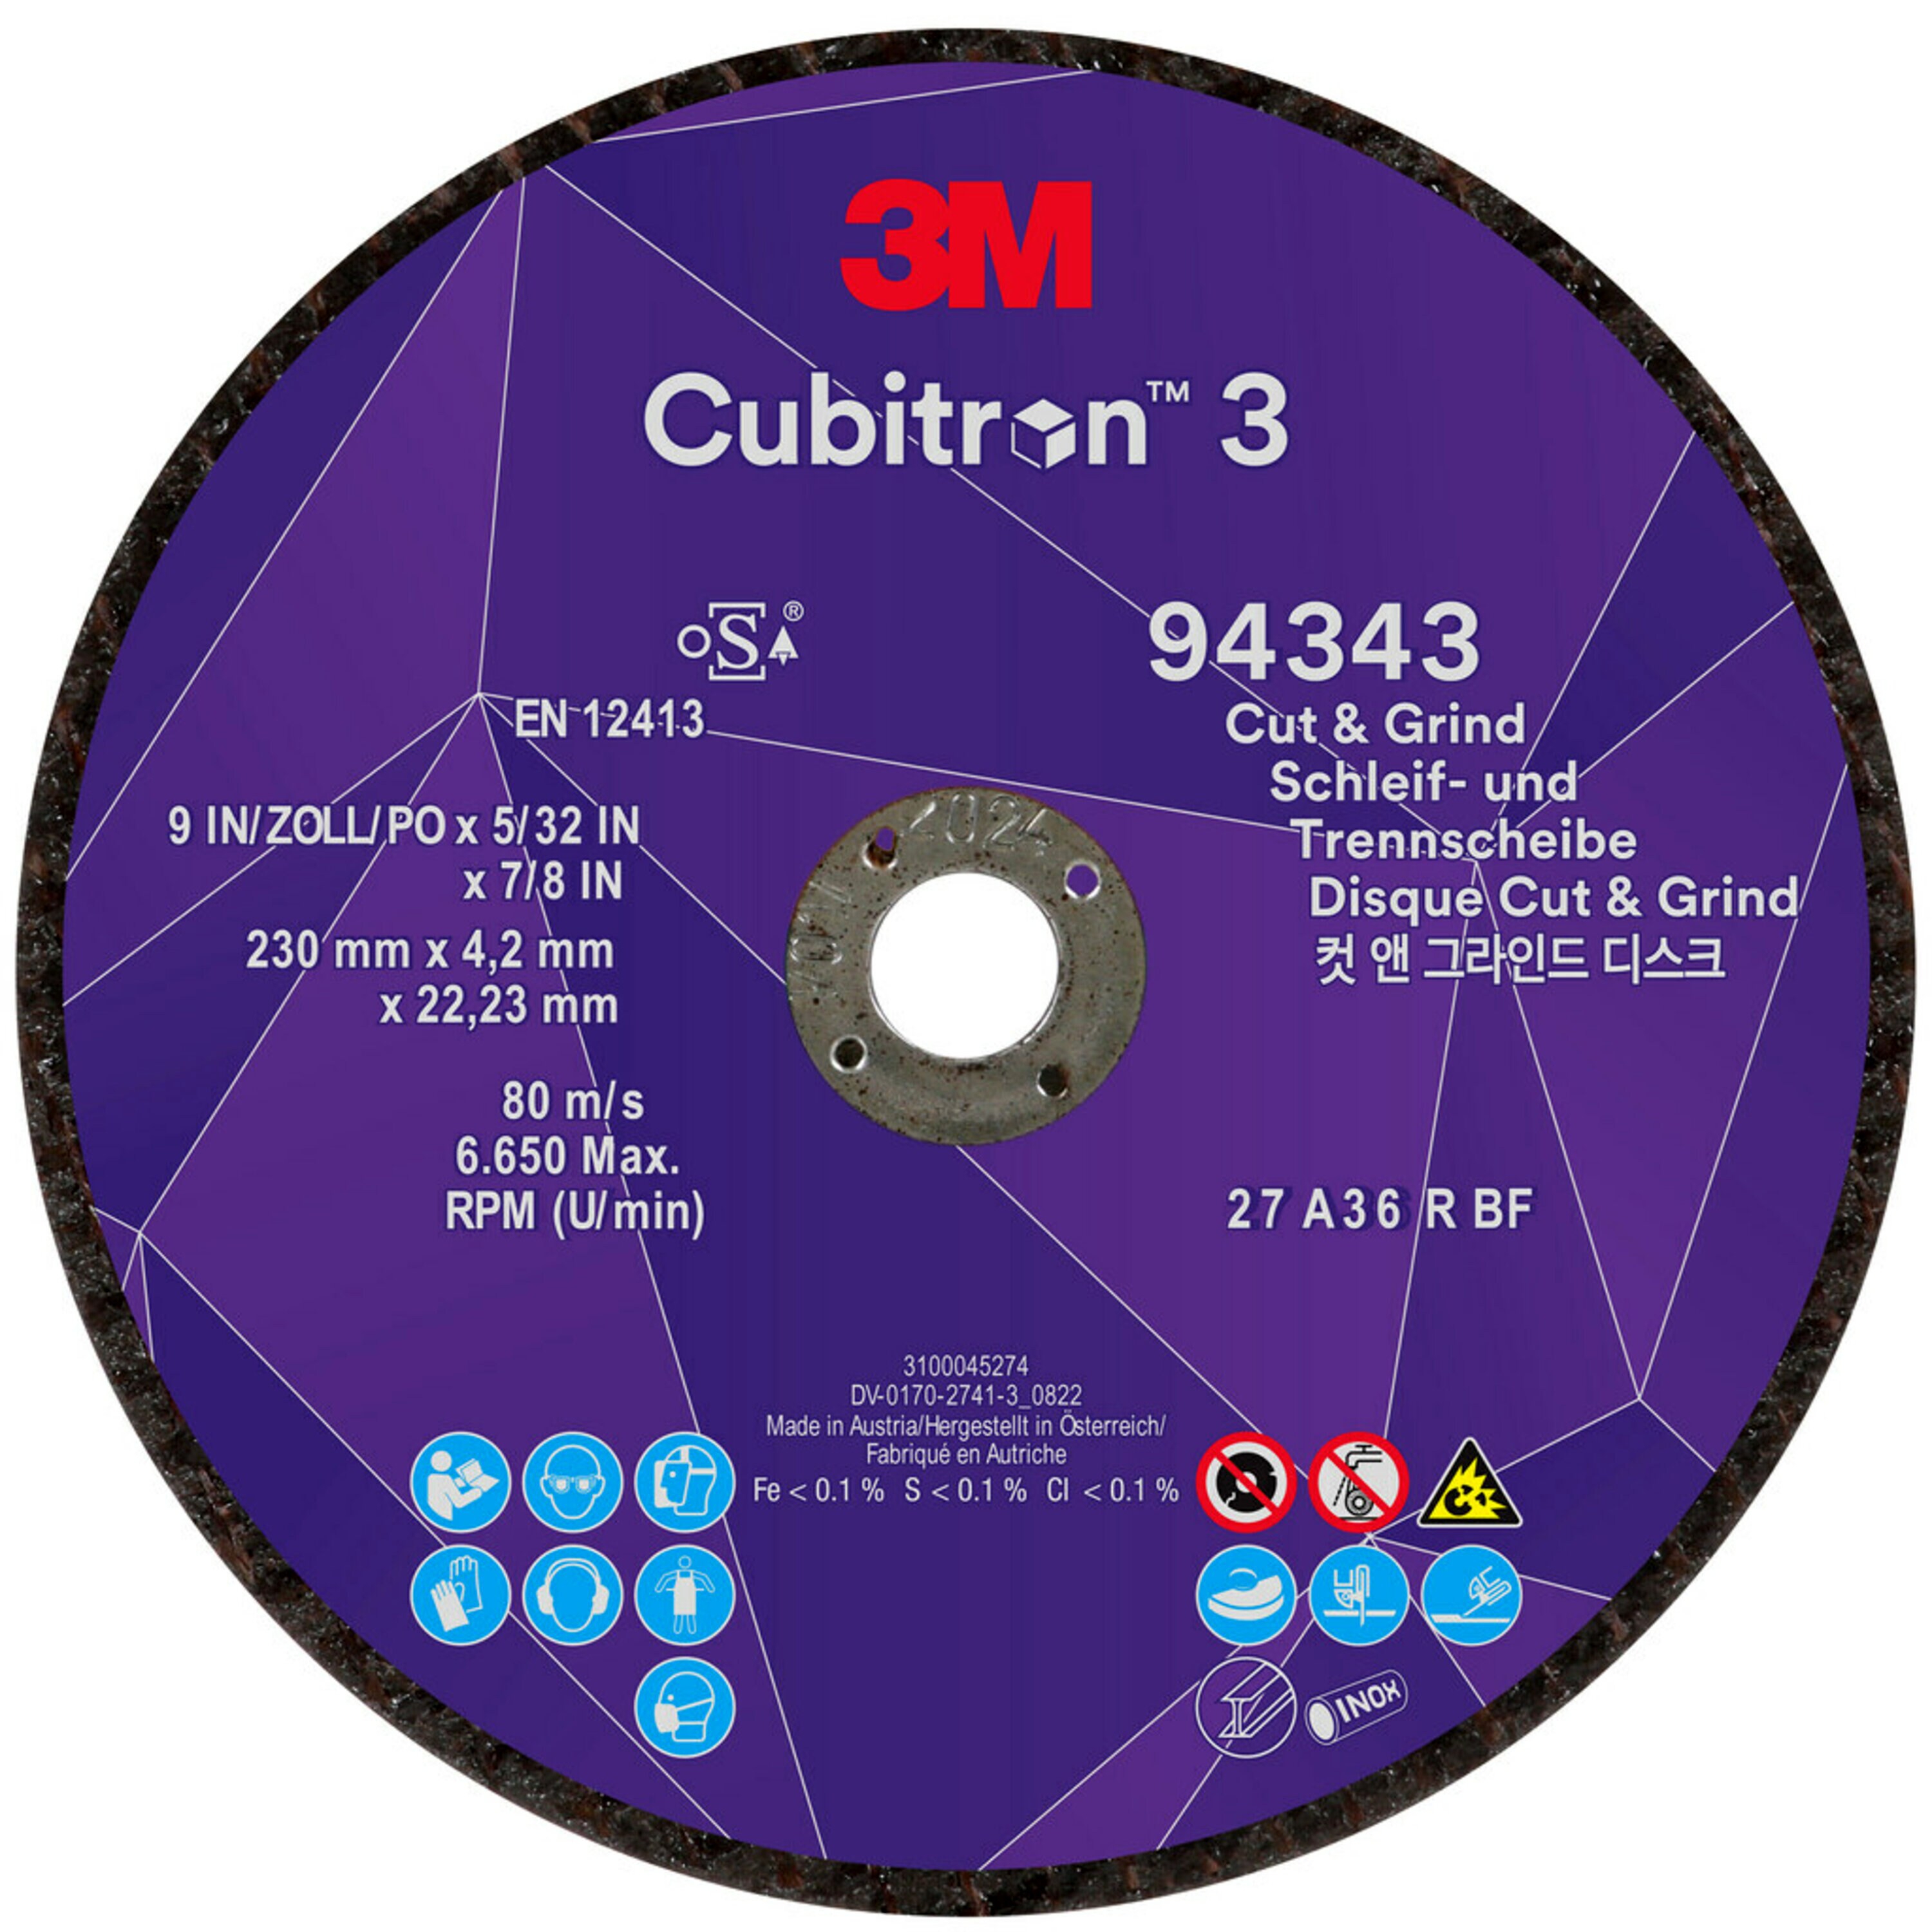 3M Cubitron 3 Cut & Grind Schruppscheibe, 230 mm, 4,2 mm, 22,23 mm, 36+, Typ 27 #94542